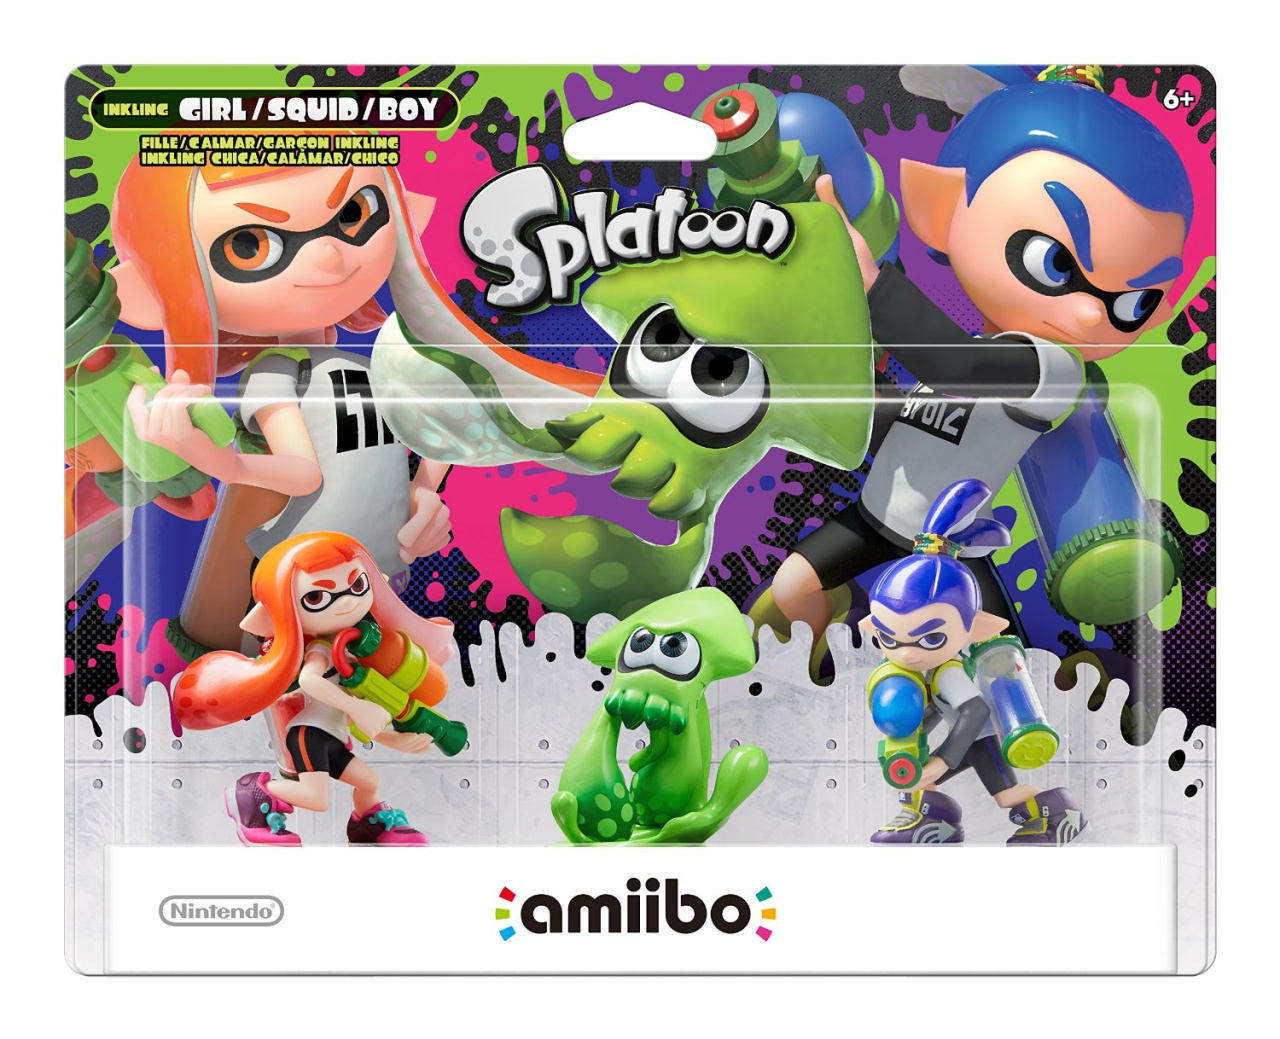 Splatoon amiibo 3-Pack Will Cost $35, According To Amazon - Nintendo Life